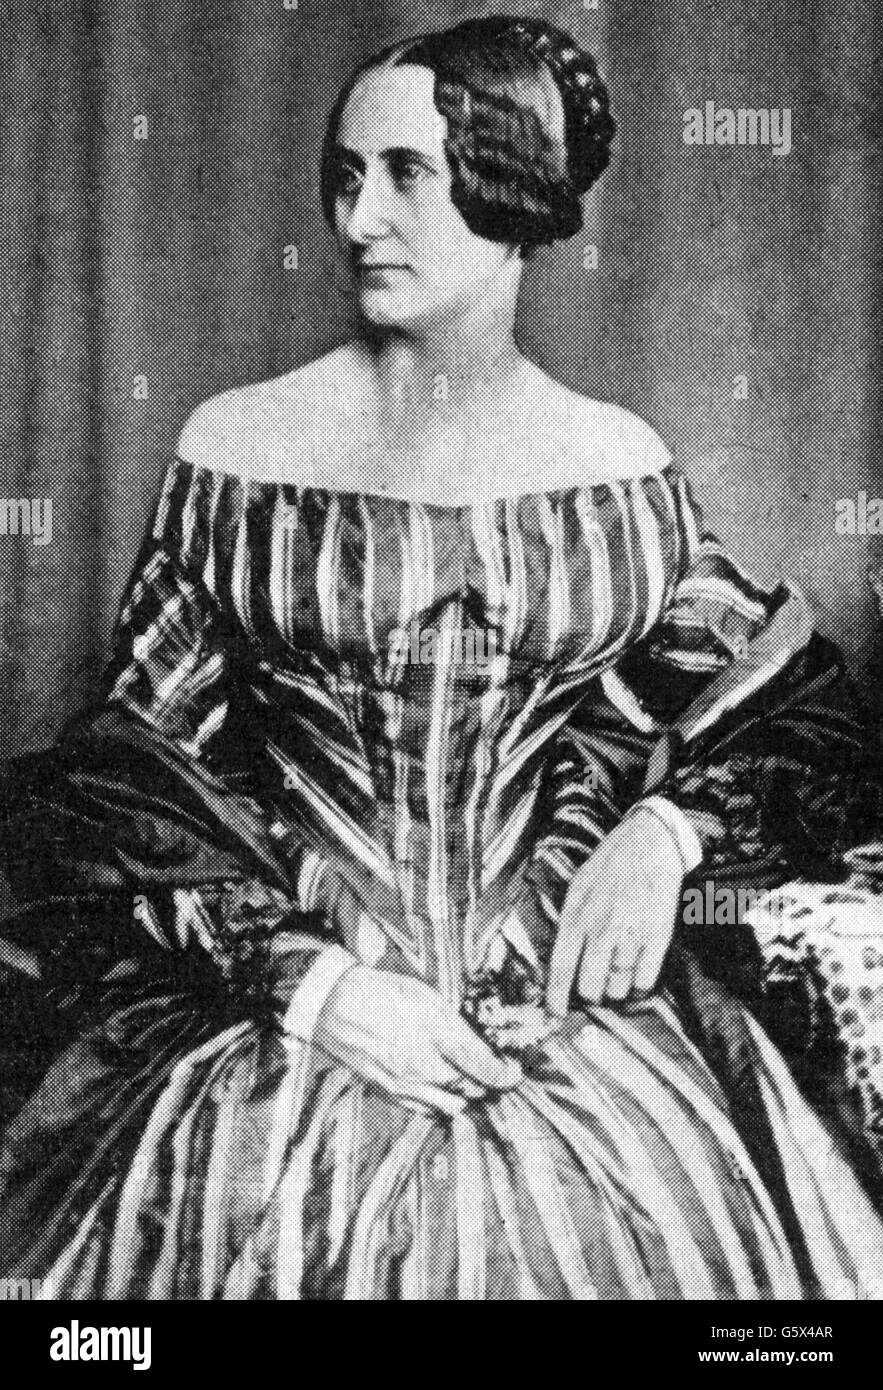 Storm, Constanze, 5.5.188 - 24.5.1865, Frau von Theodor Storm, halbe Länge, nach dem Foto, ca. 1860, Stockfoto